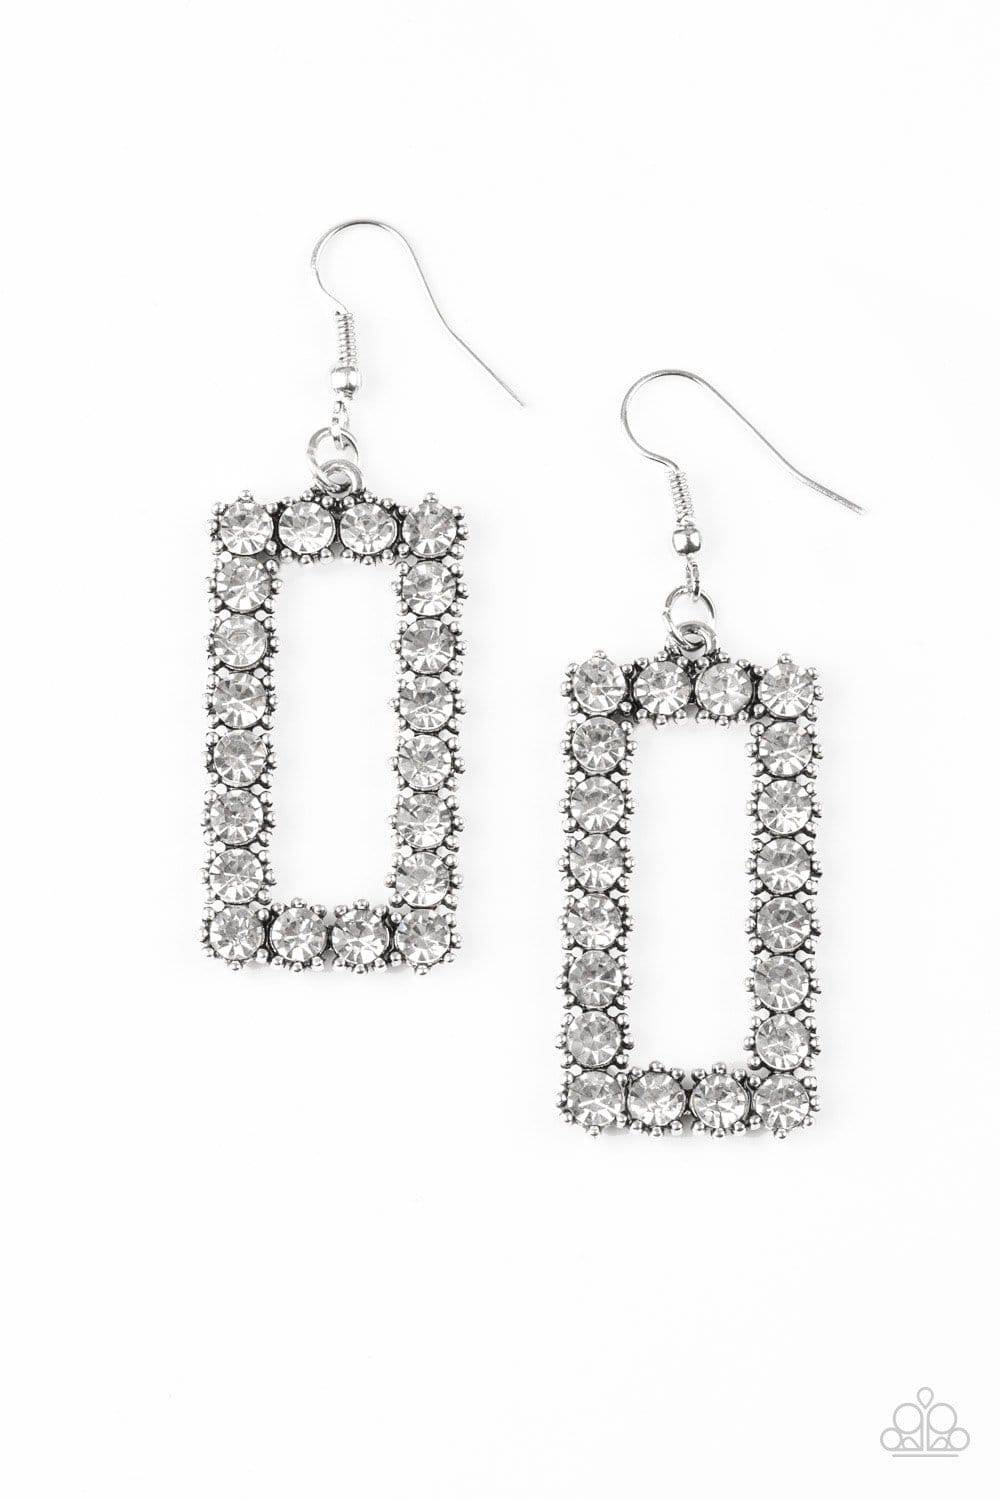 Mirror, Mirror - White Rhinestone Earrings - Paparazzi Accessories - GlaMarous Titi Jewels